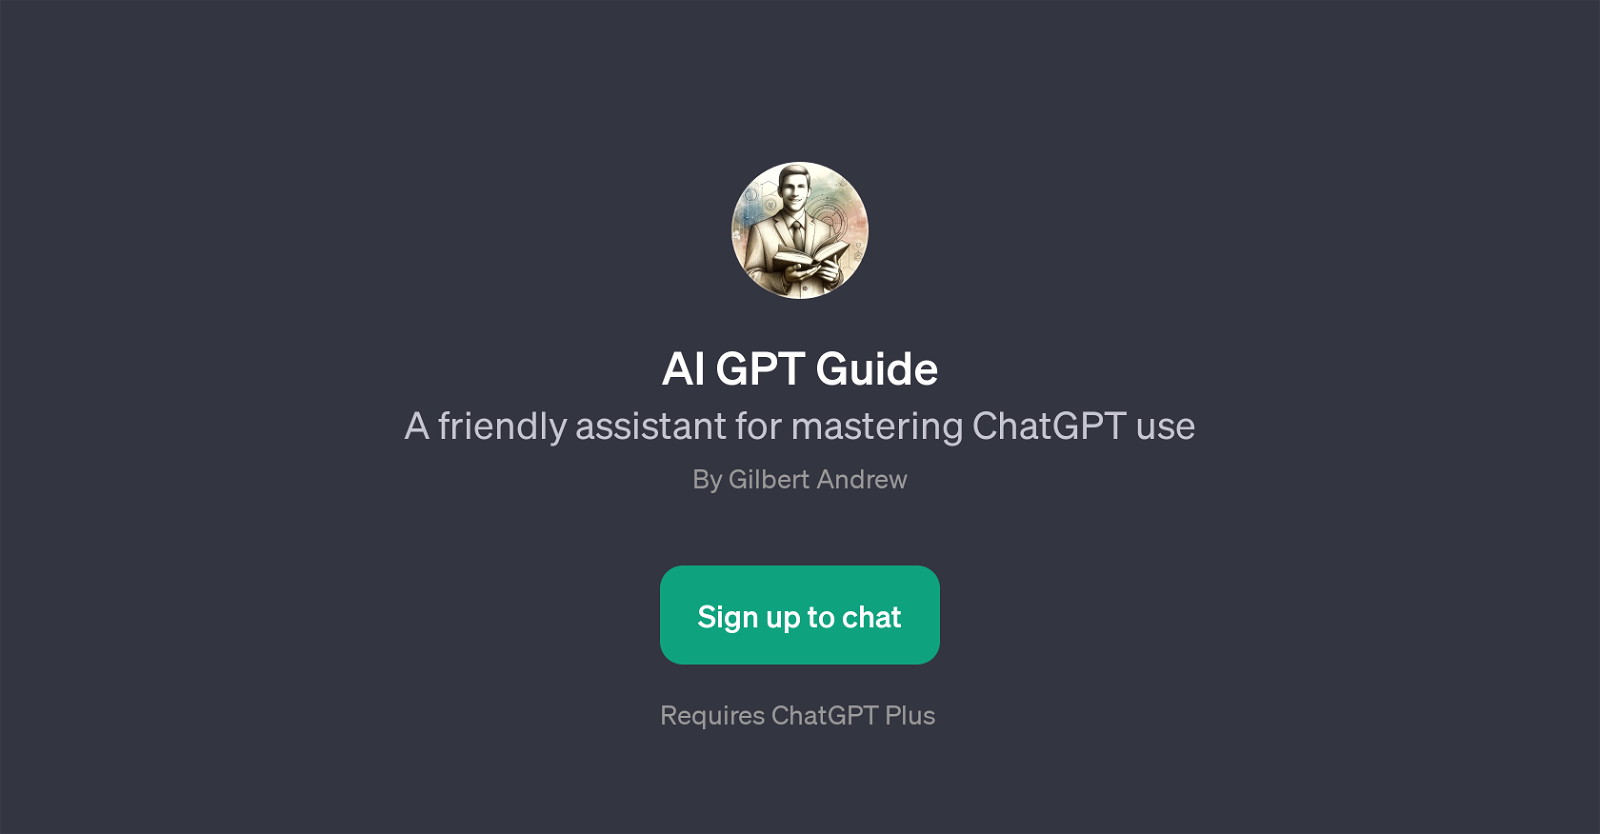 AI GPT Guide website